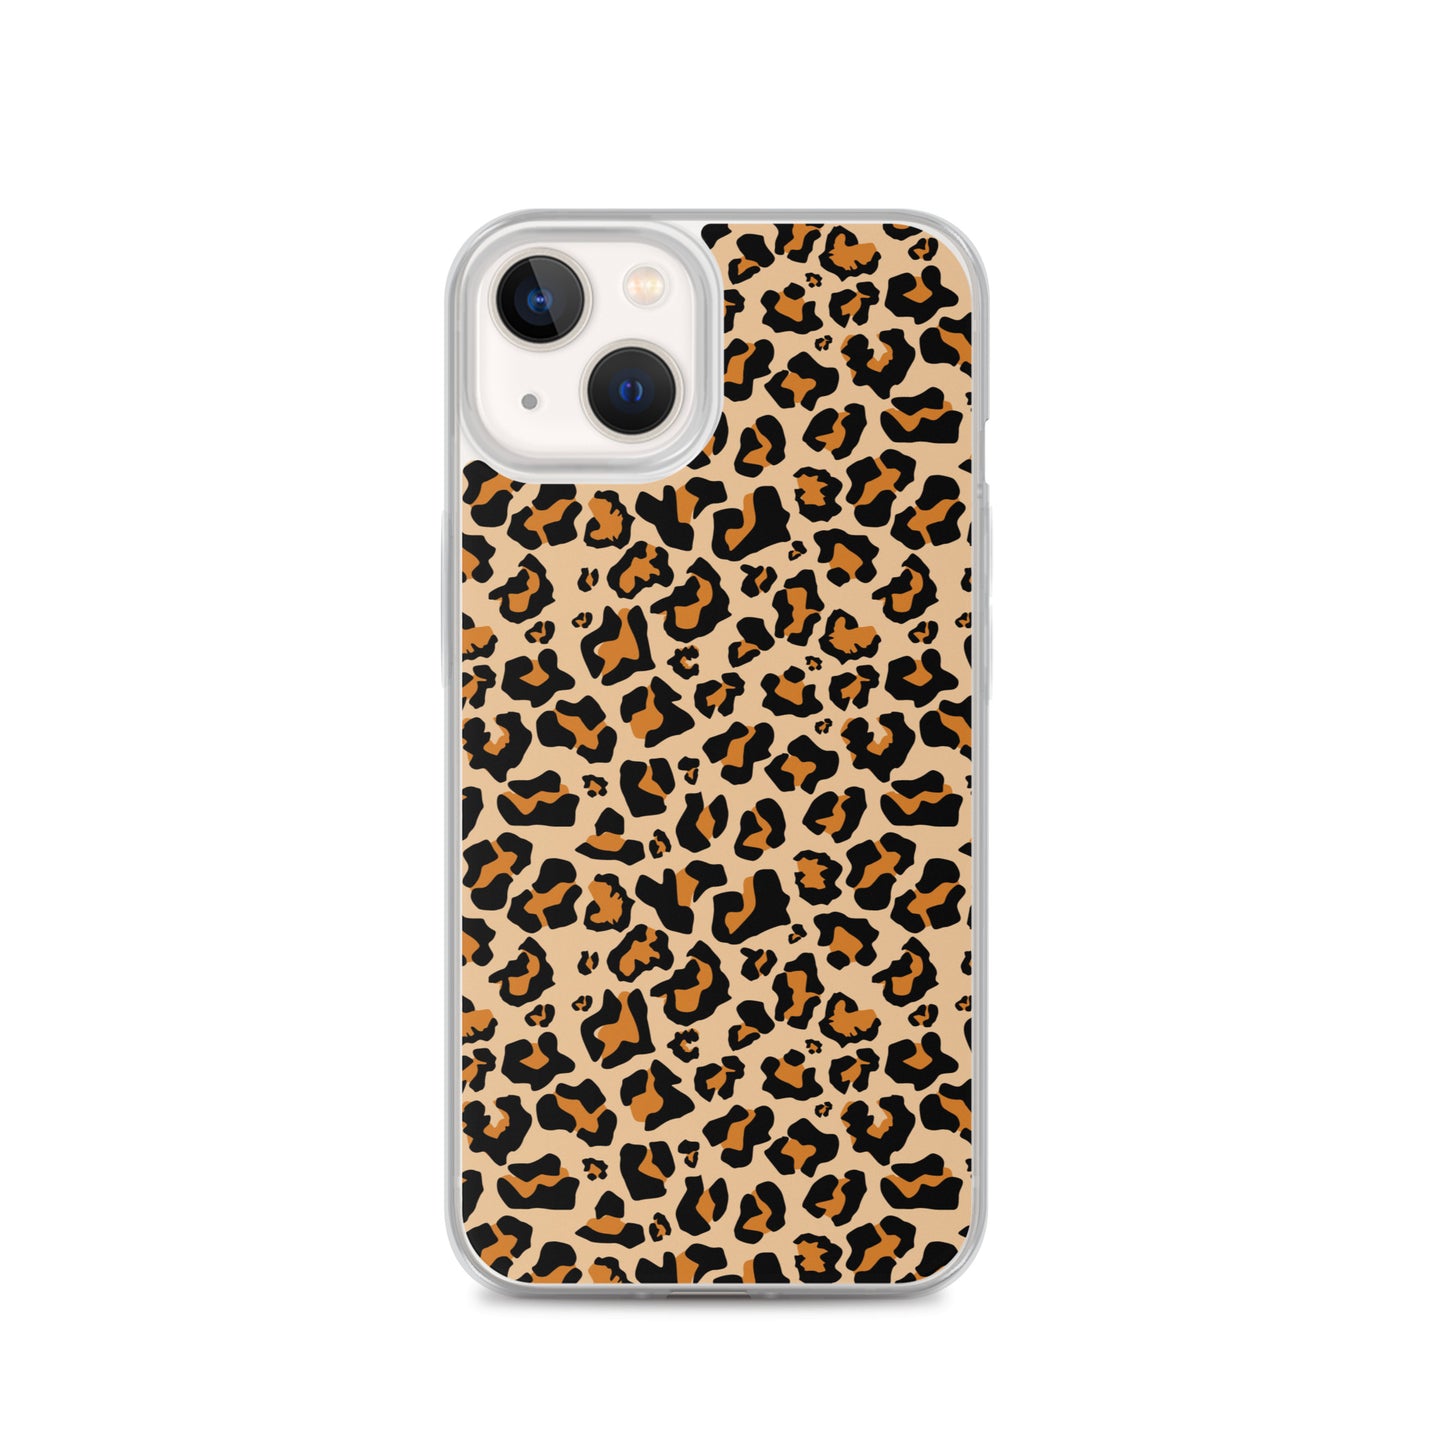 Leopard Print iPhone 13 12 Case Pro Max, Cheetah Animal iPhone 11 Mini SE 2020 XS Max XR X 7 Plus 8 Cell phone Starcove Fashion